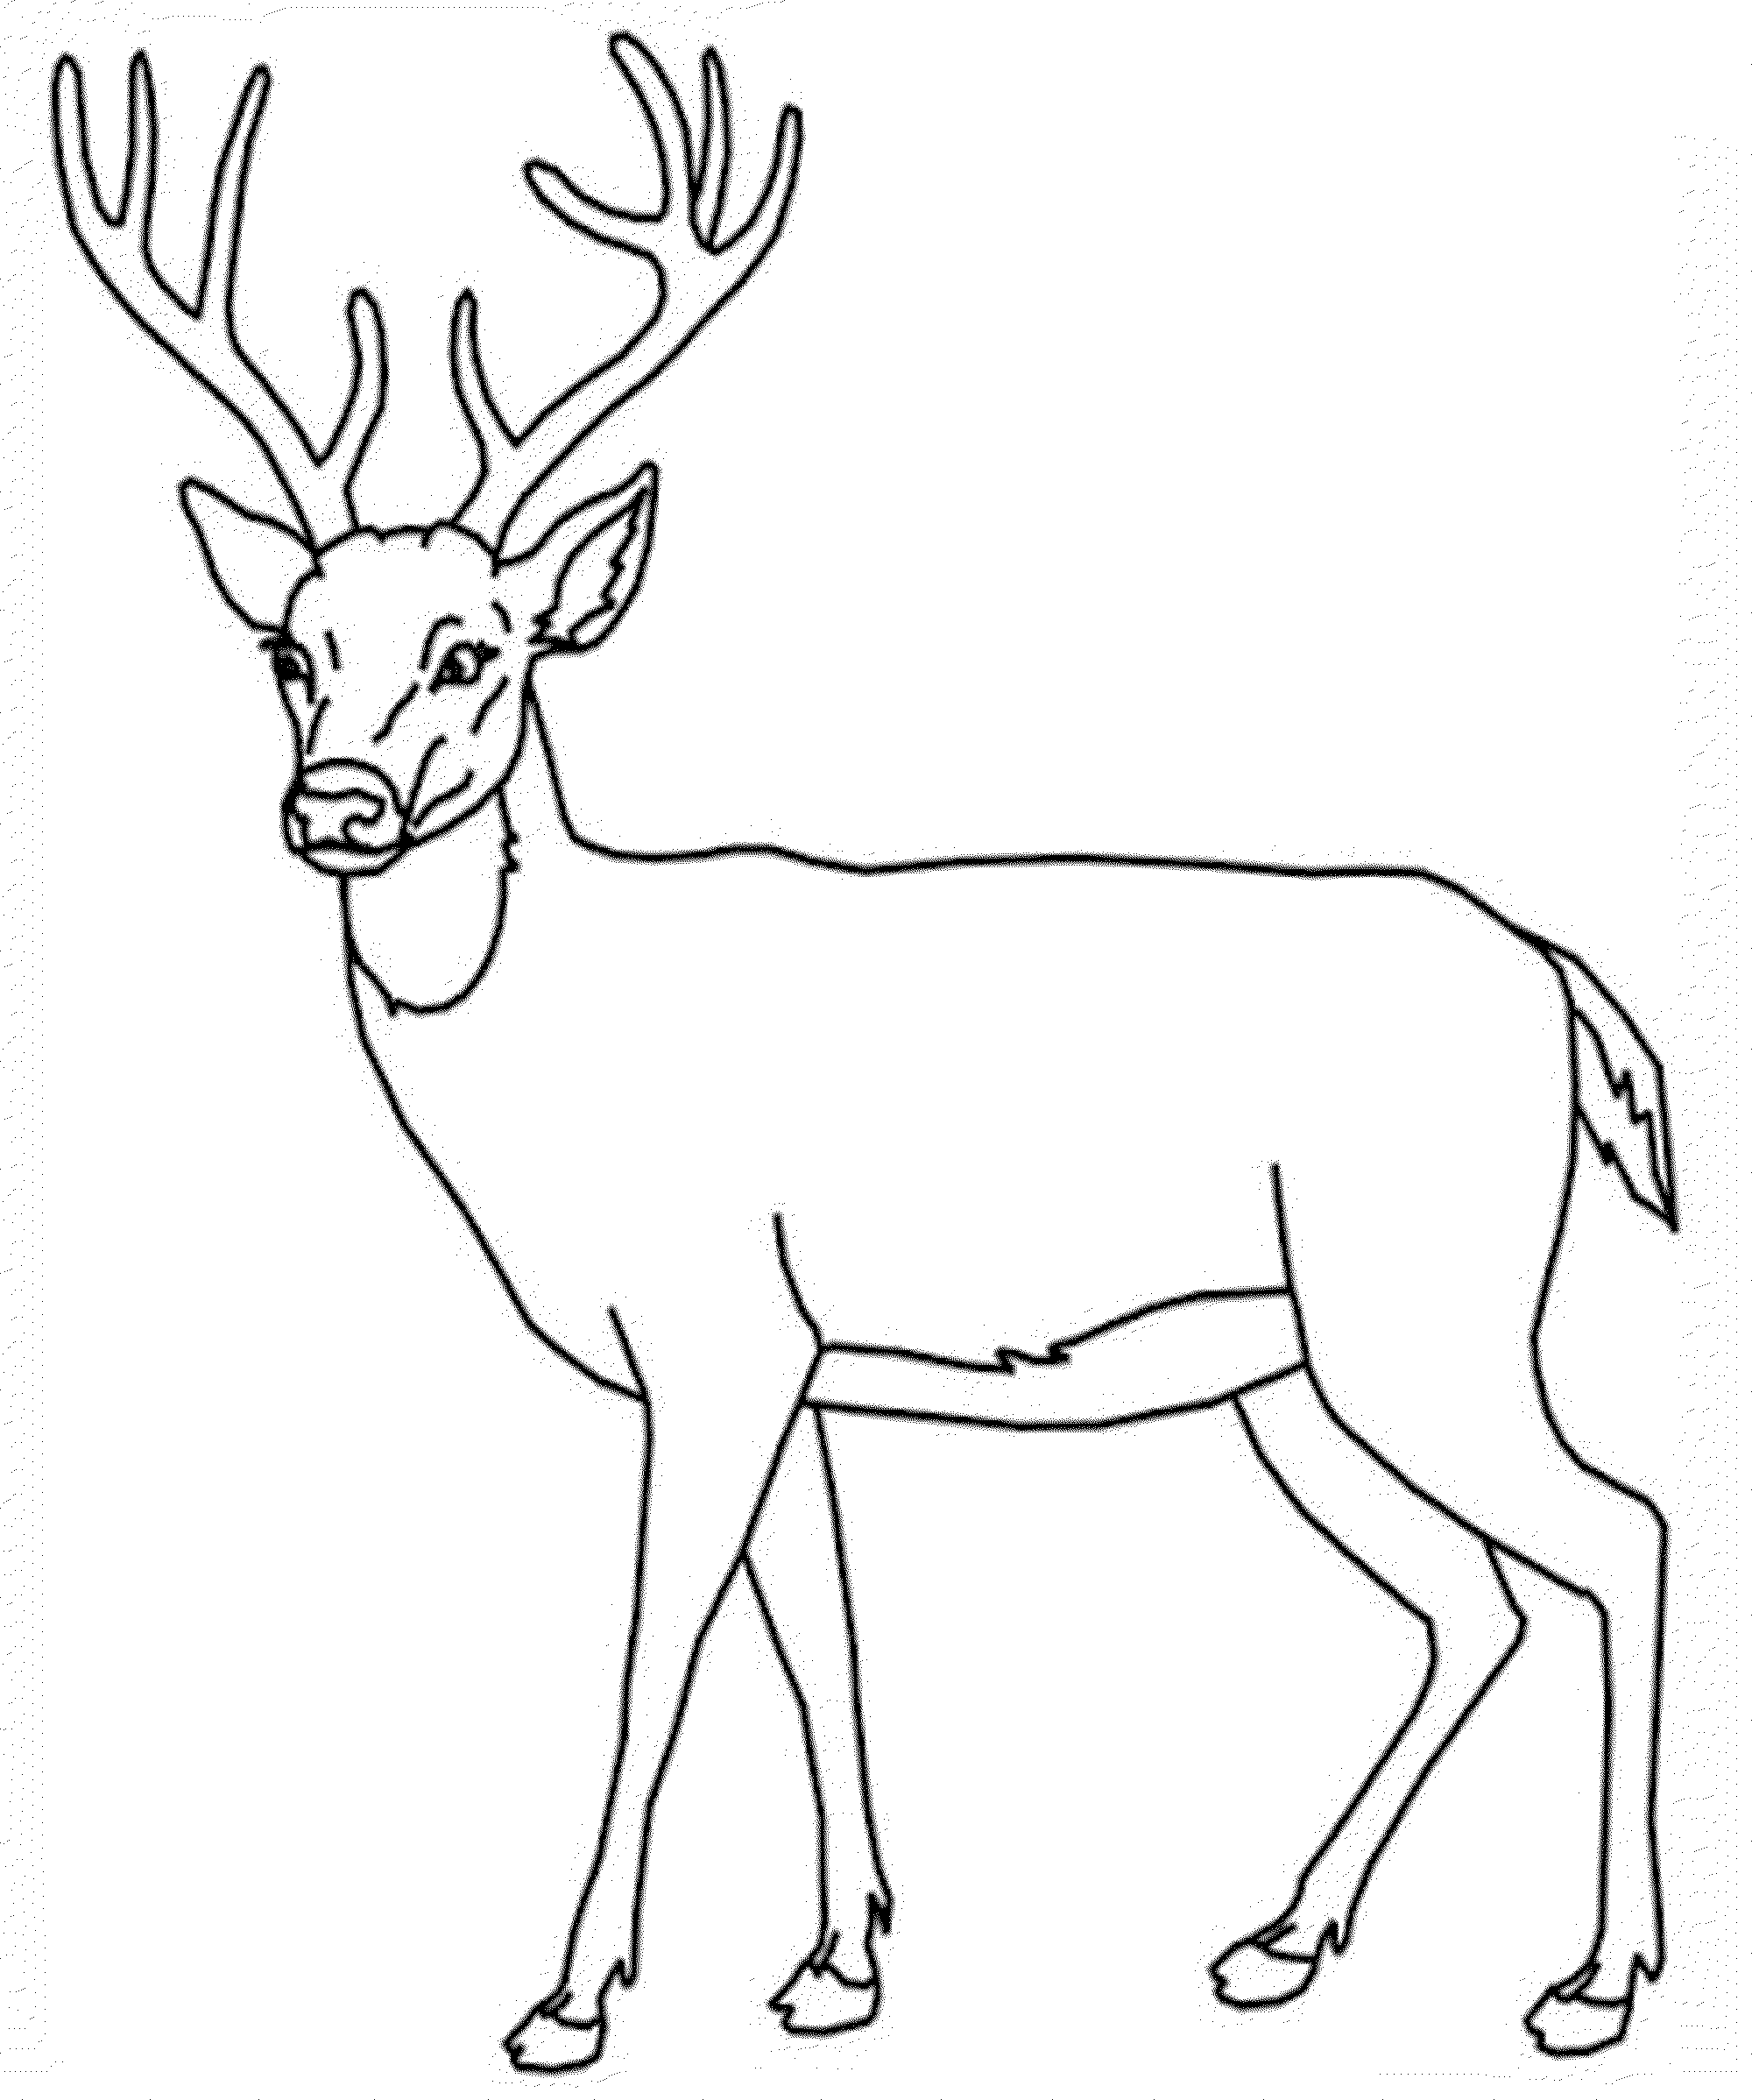 12 Pics Of Big Whitetail Deer Coloring Pages - Big Deer Coloring